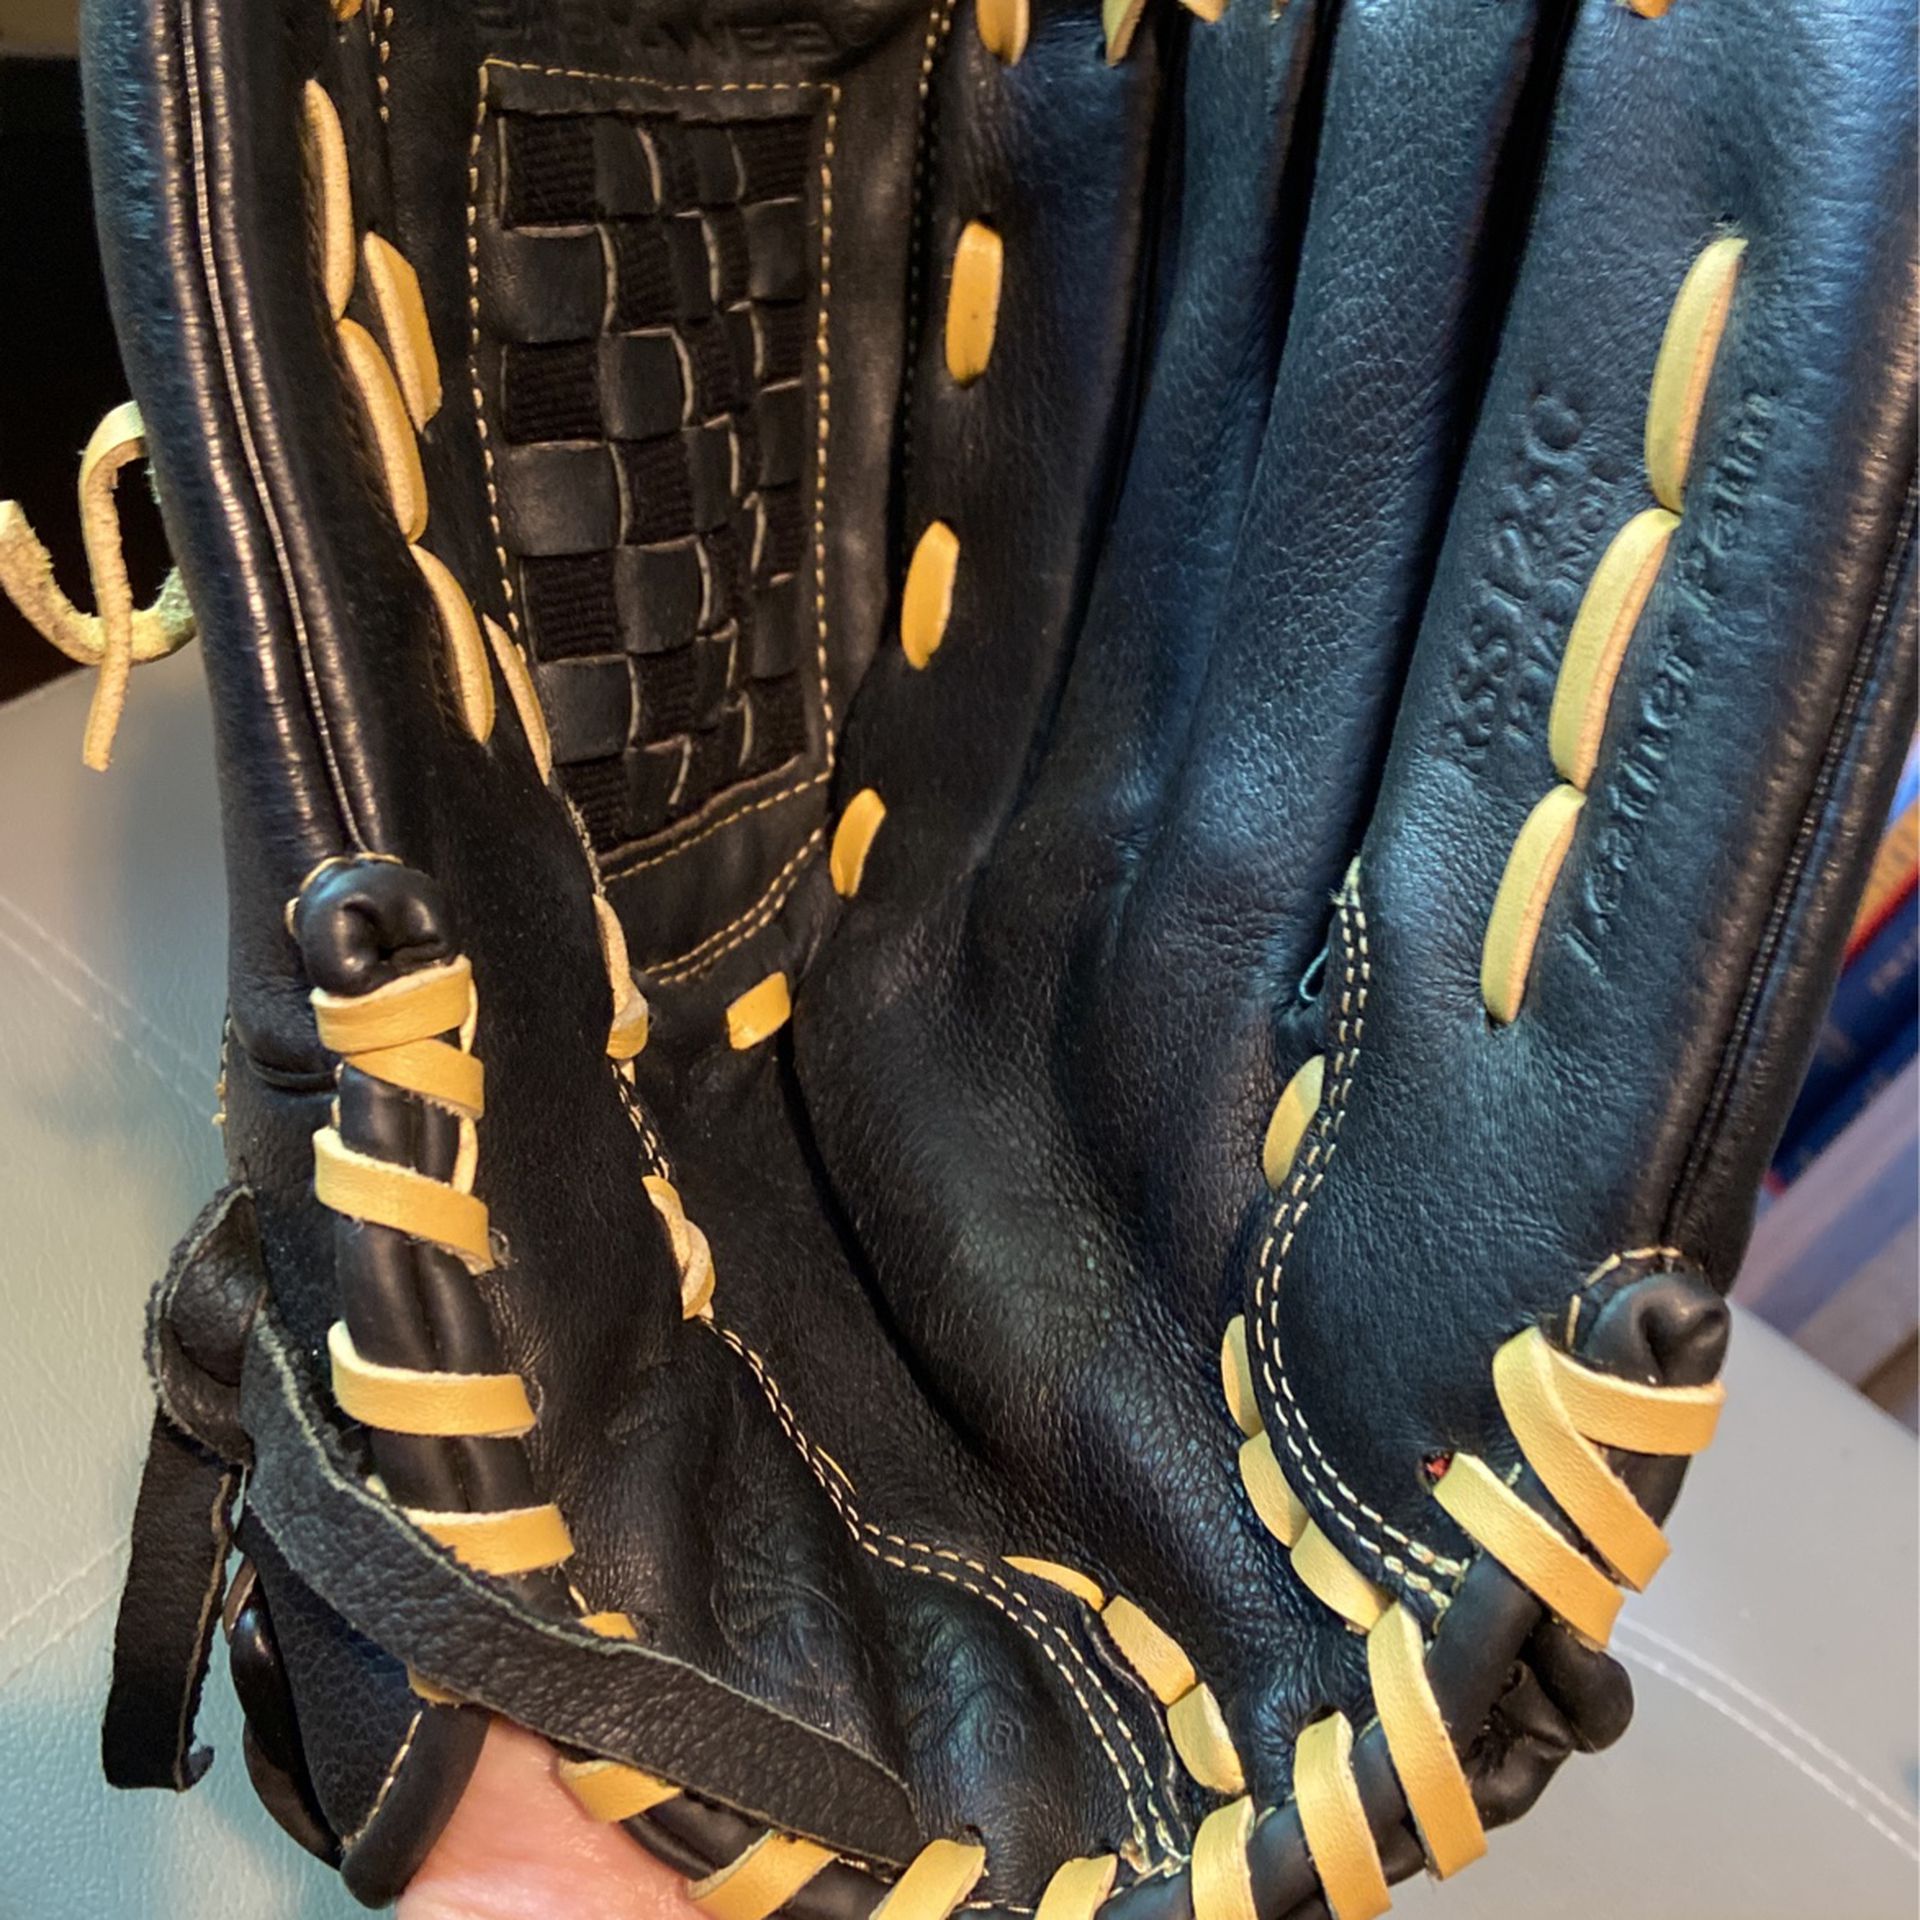 Rawlings RSS1250 12.5” Softball Glove